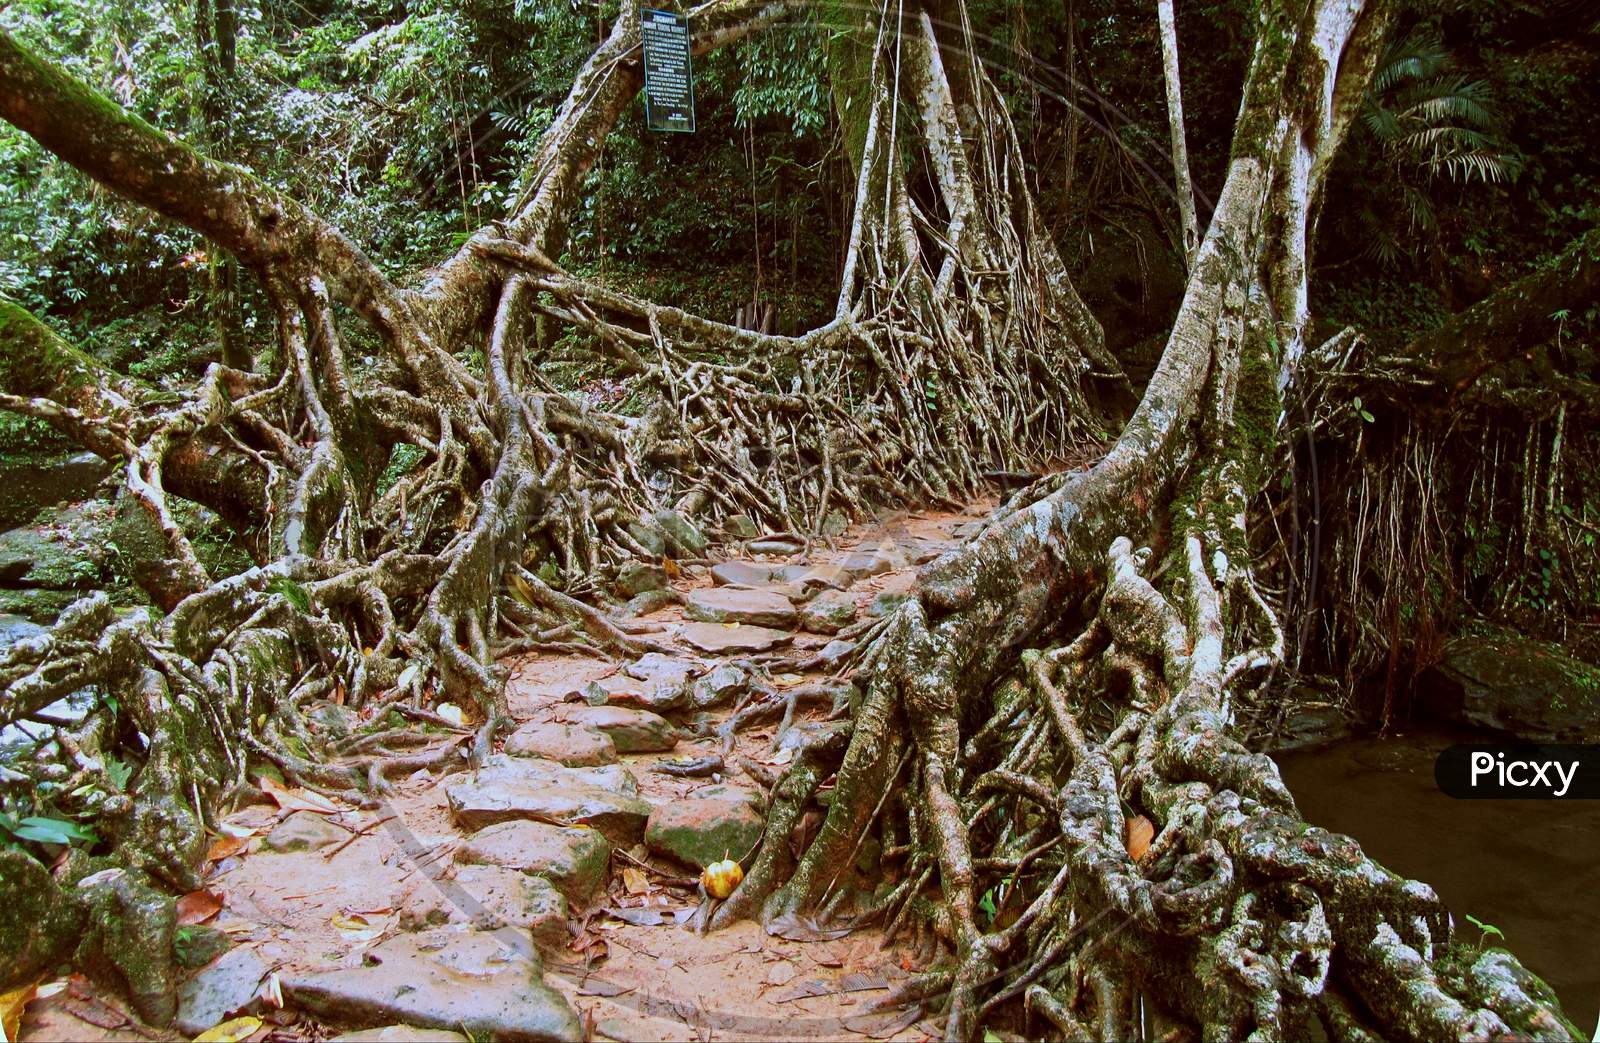 Living root bridge, Meghalaya